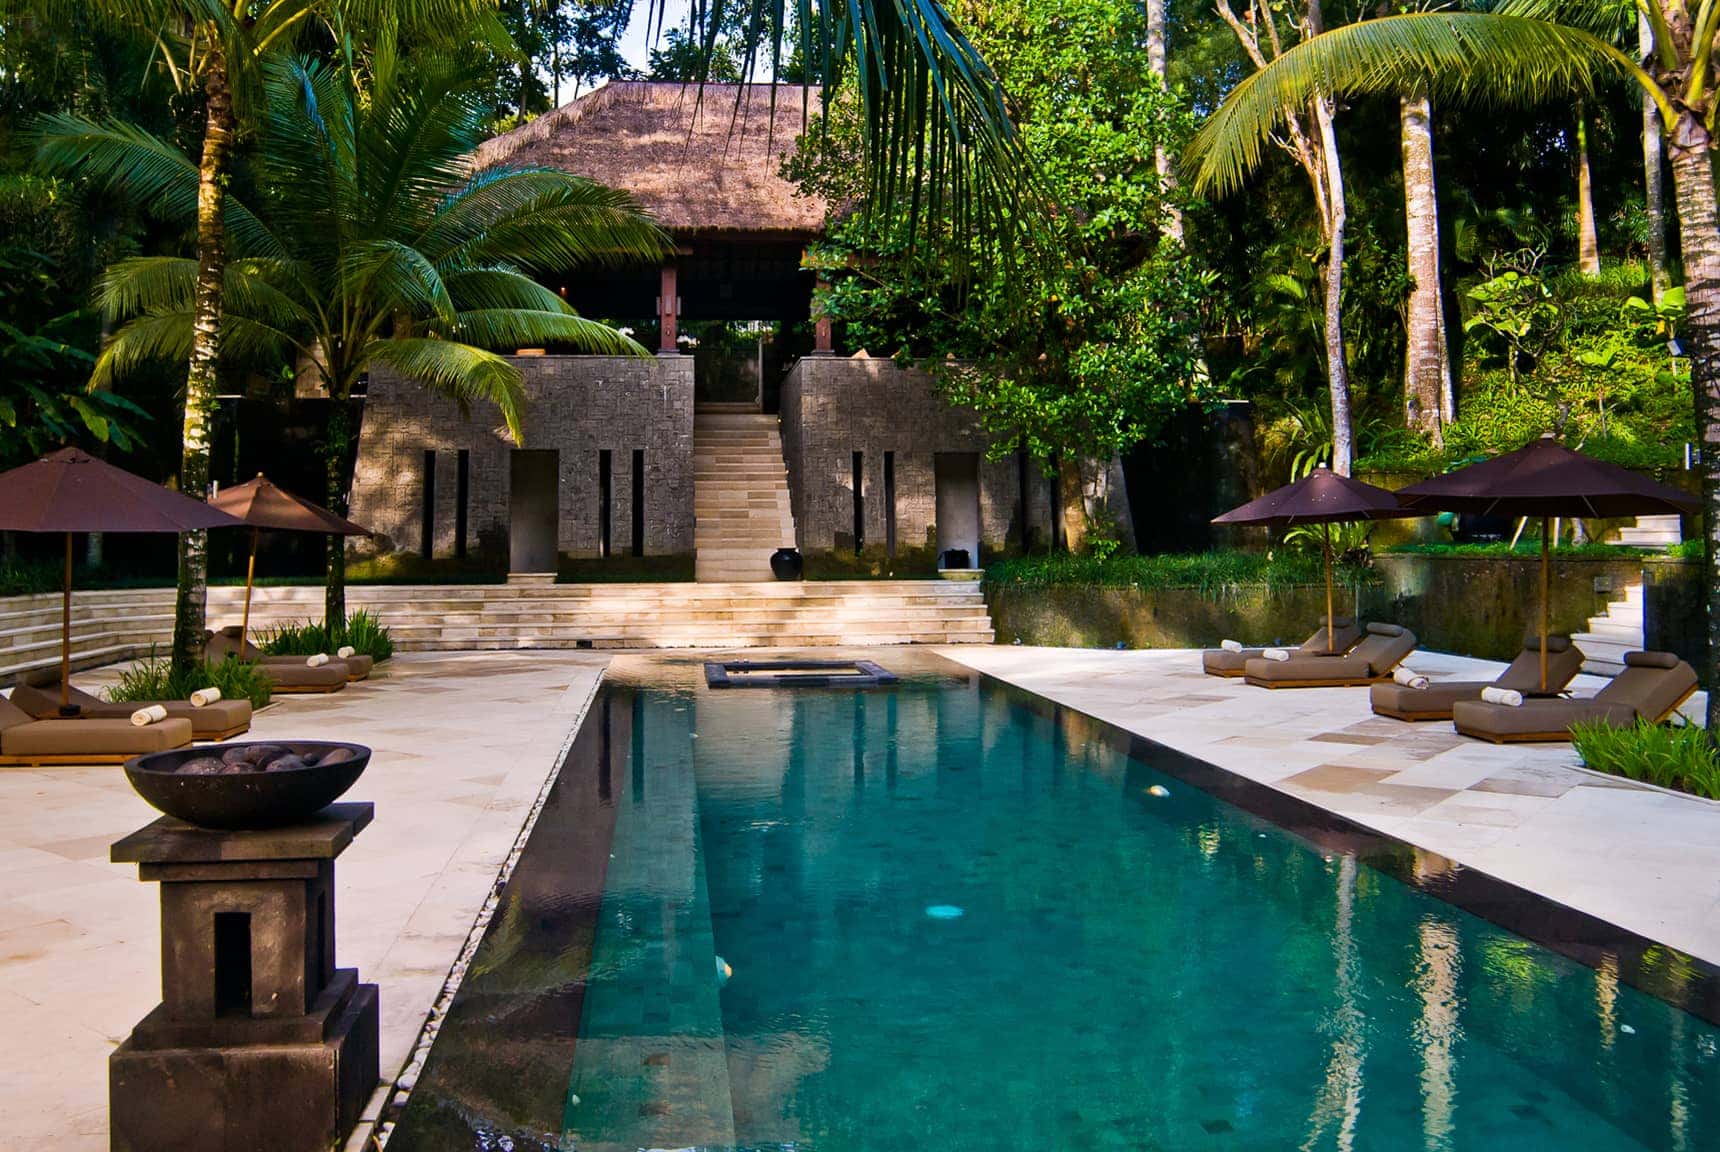 Villa Sanctuary Bali - Canggu, Bali Indonesia (Bali villa photography by master photographer Rick Carmichael of LuxViz)